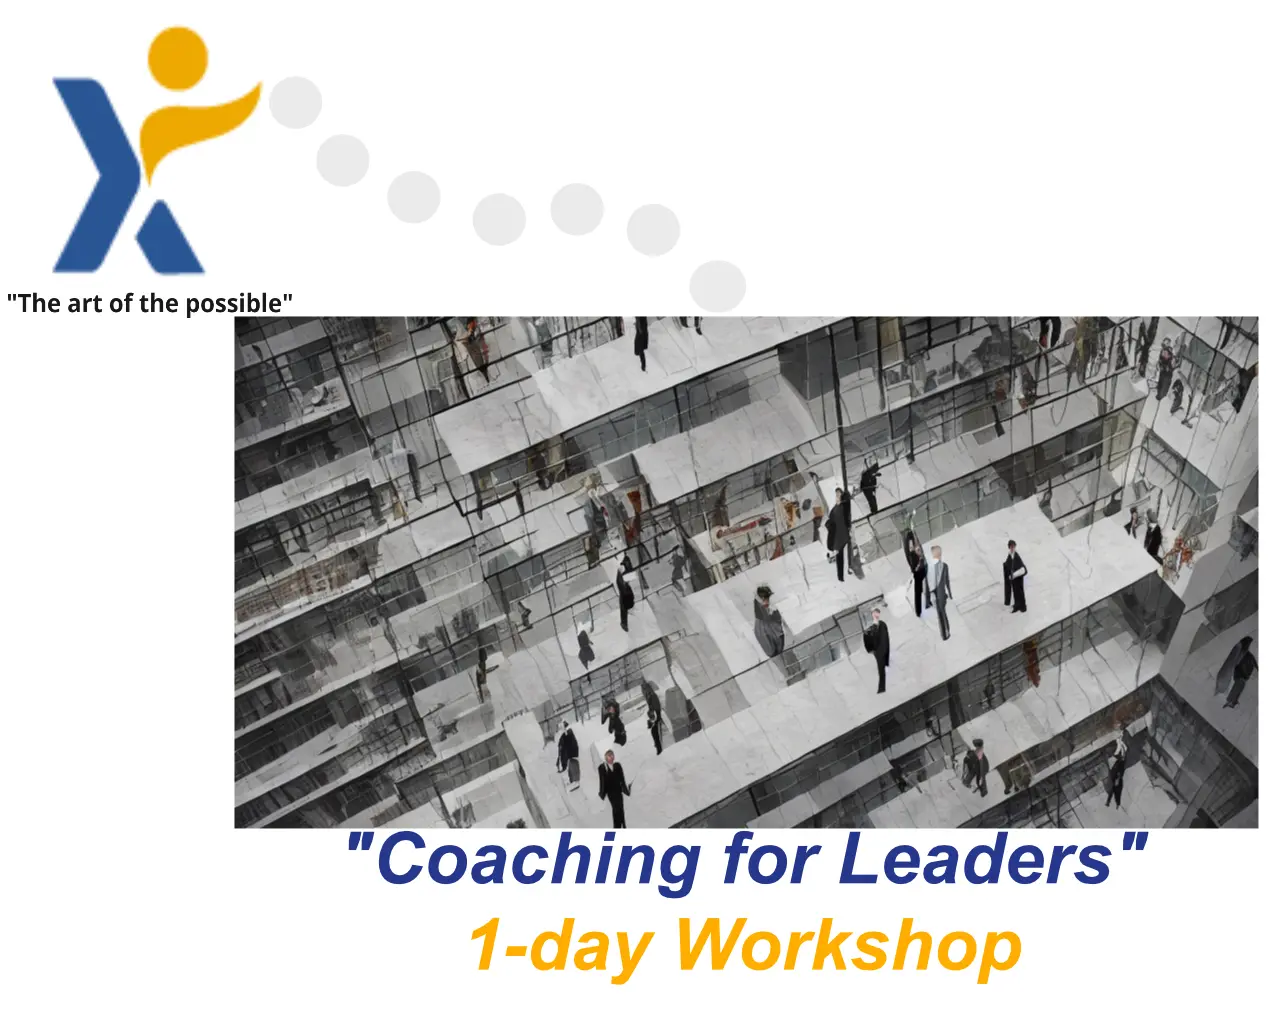 XploreAgile's Coaching for Leaders 1-day workshop